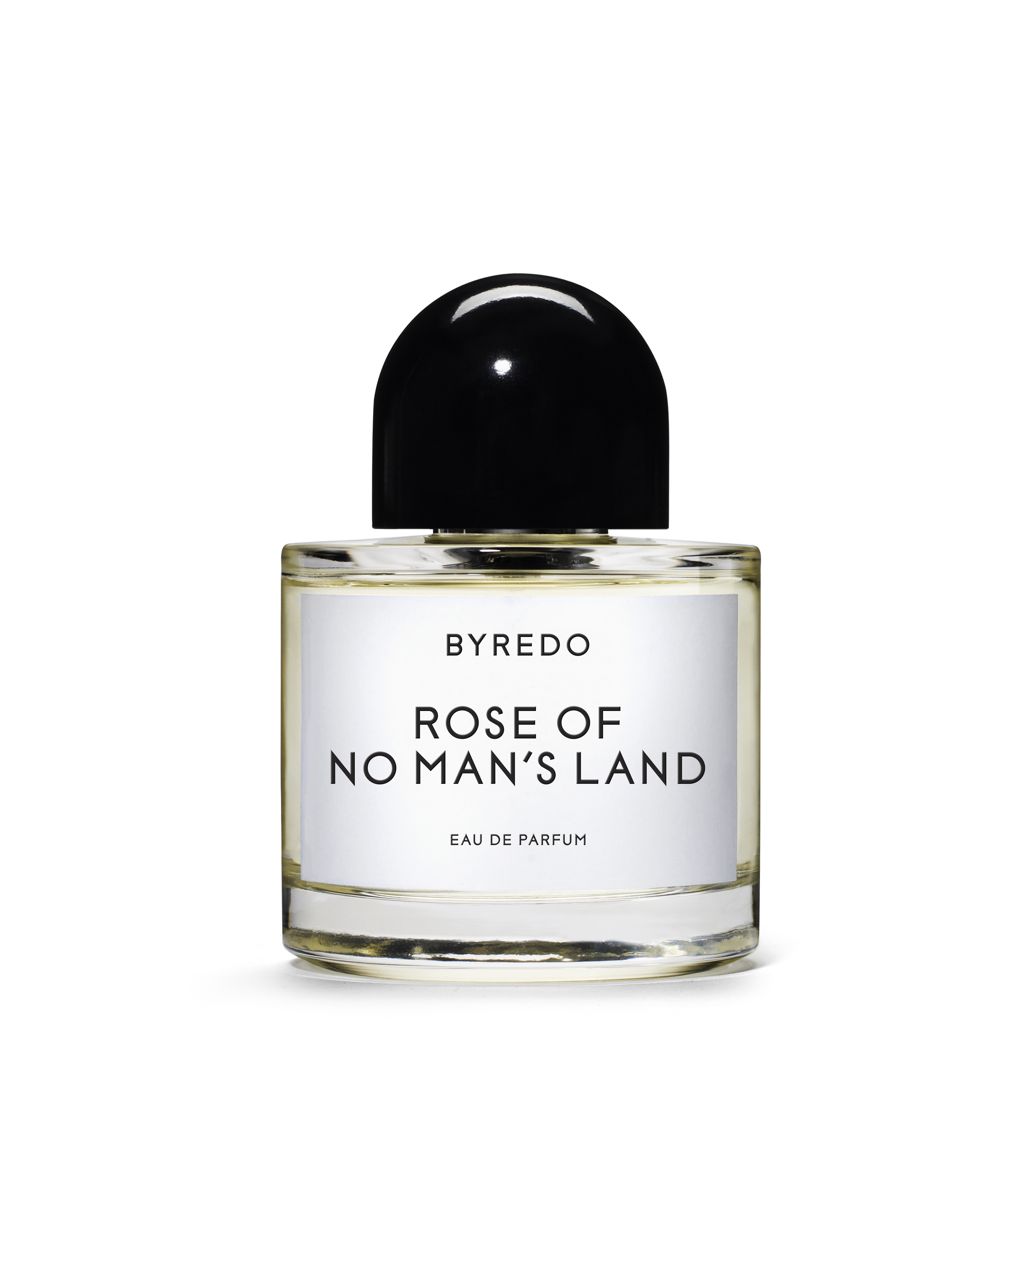 Byredo – Rose of No Man’s Land EdP 100ml – anne gallwé beauty